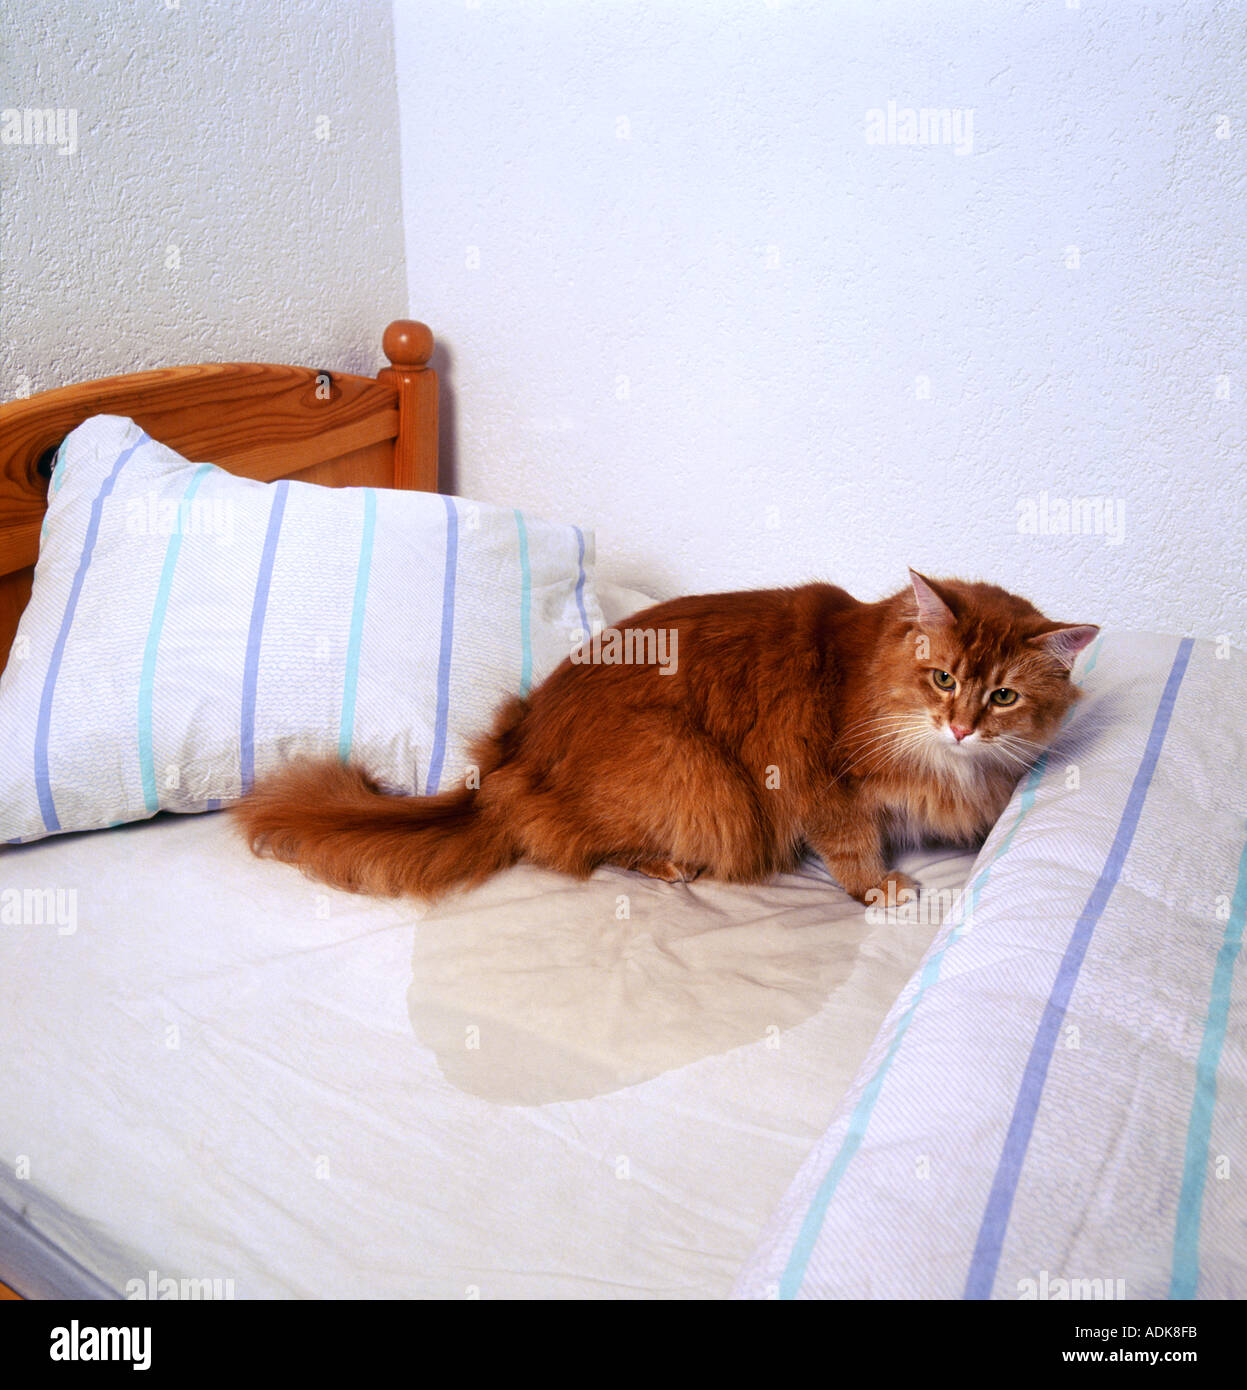 bad habit : cat peeing in bed Stock Photo - Alamy